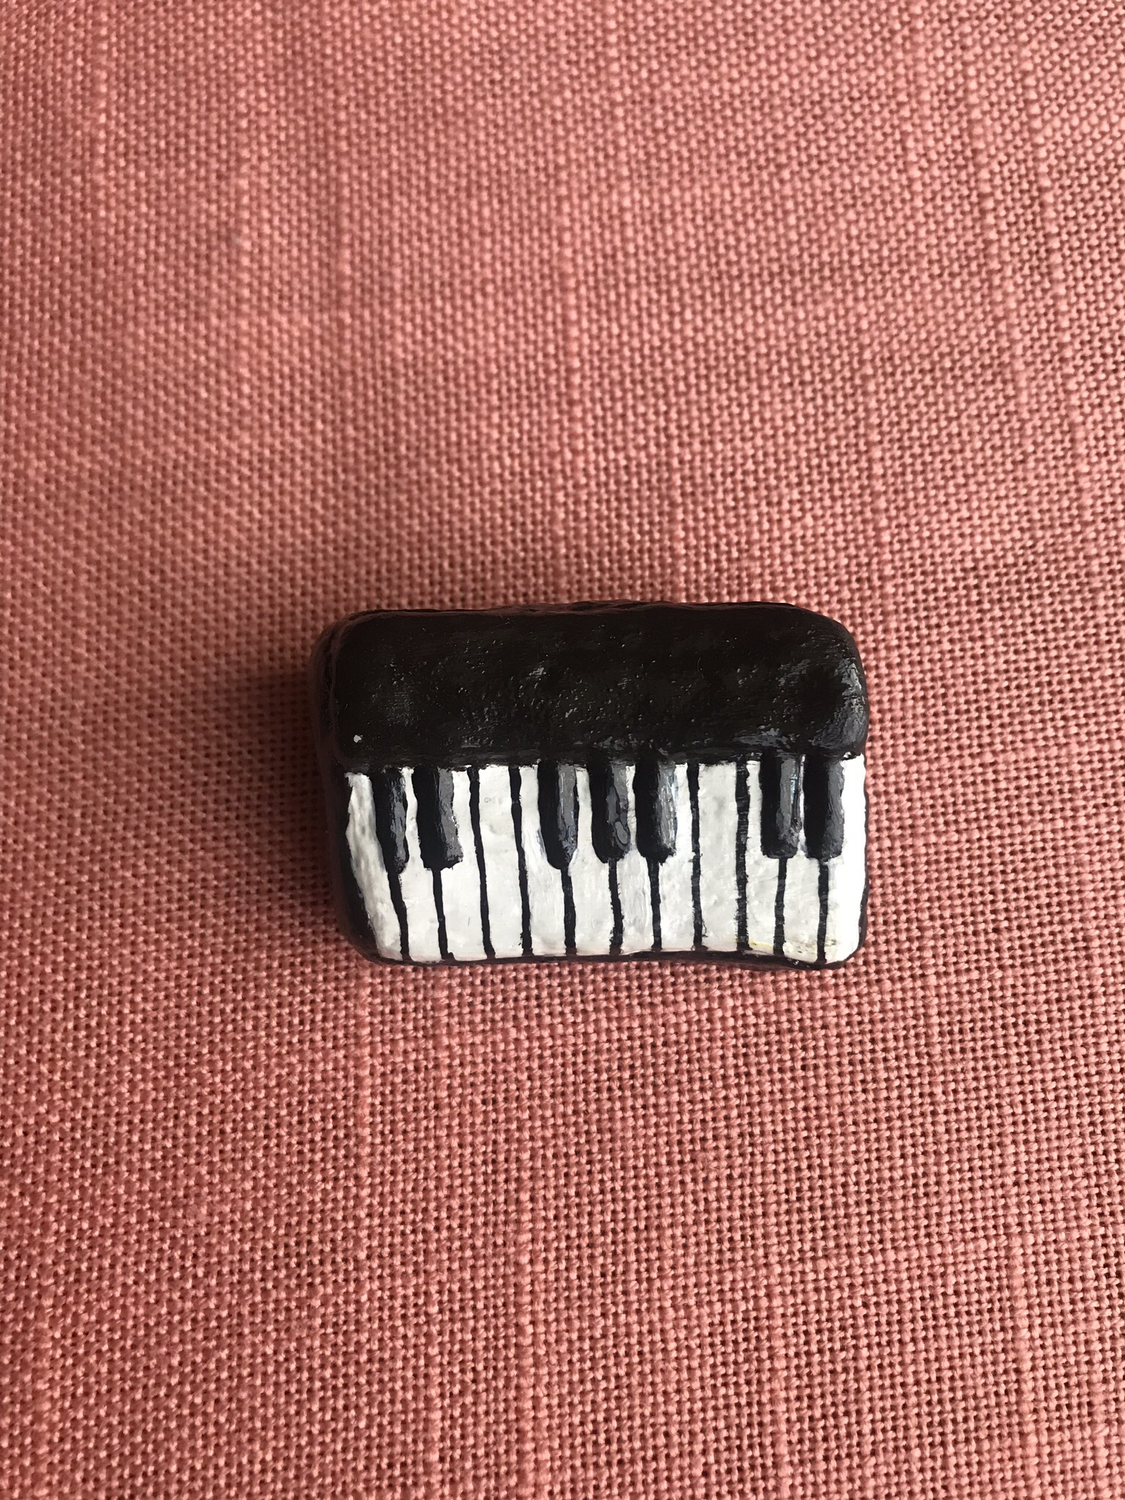 Piano Rock